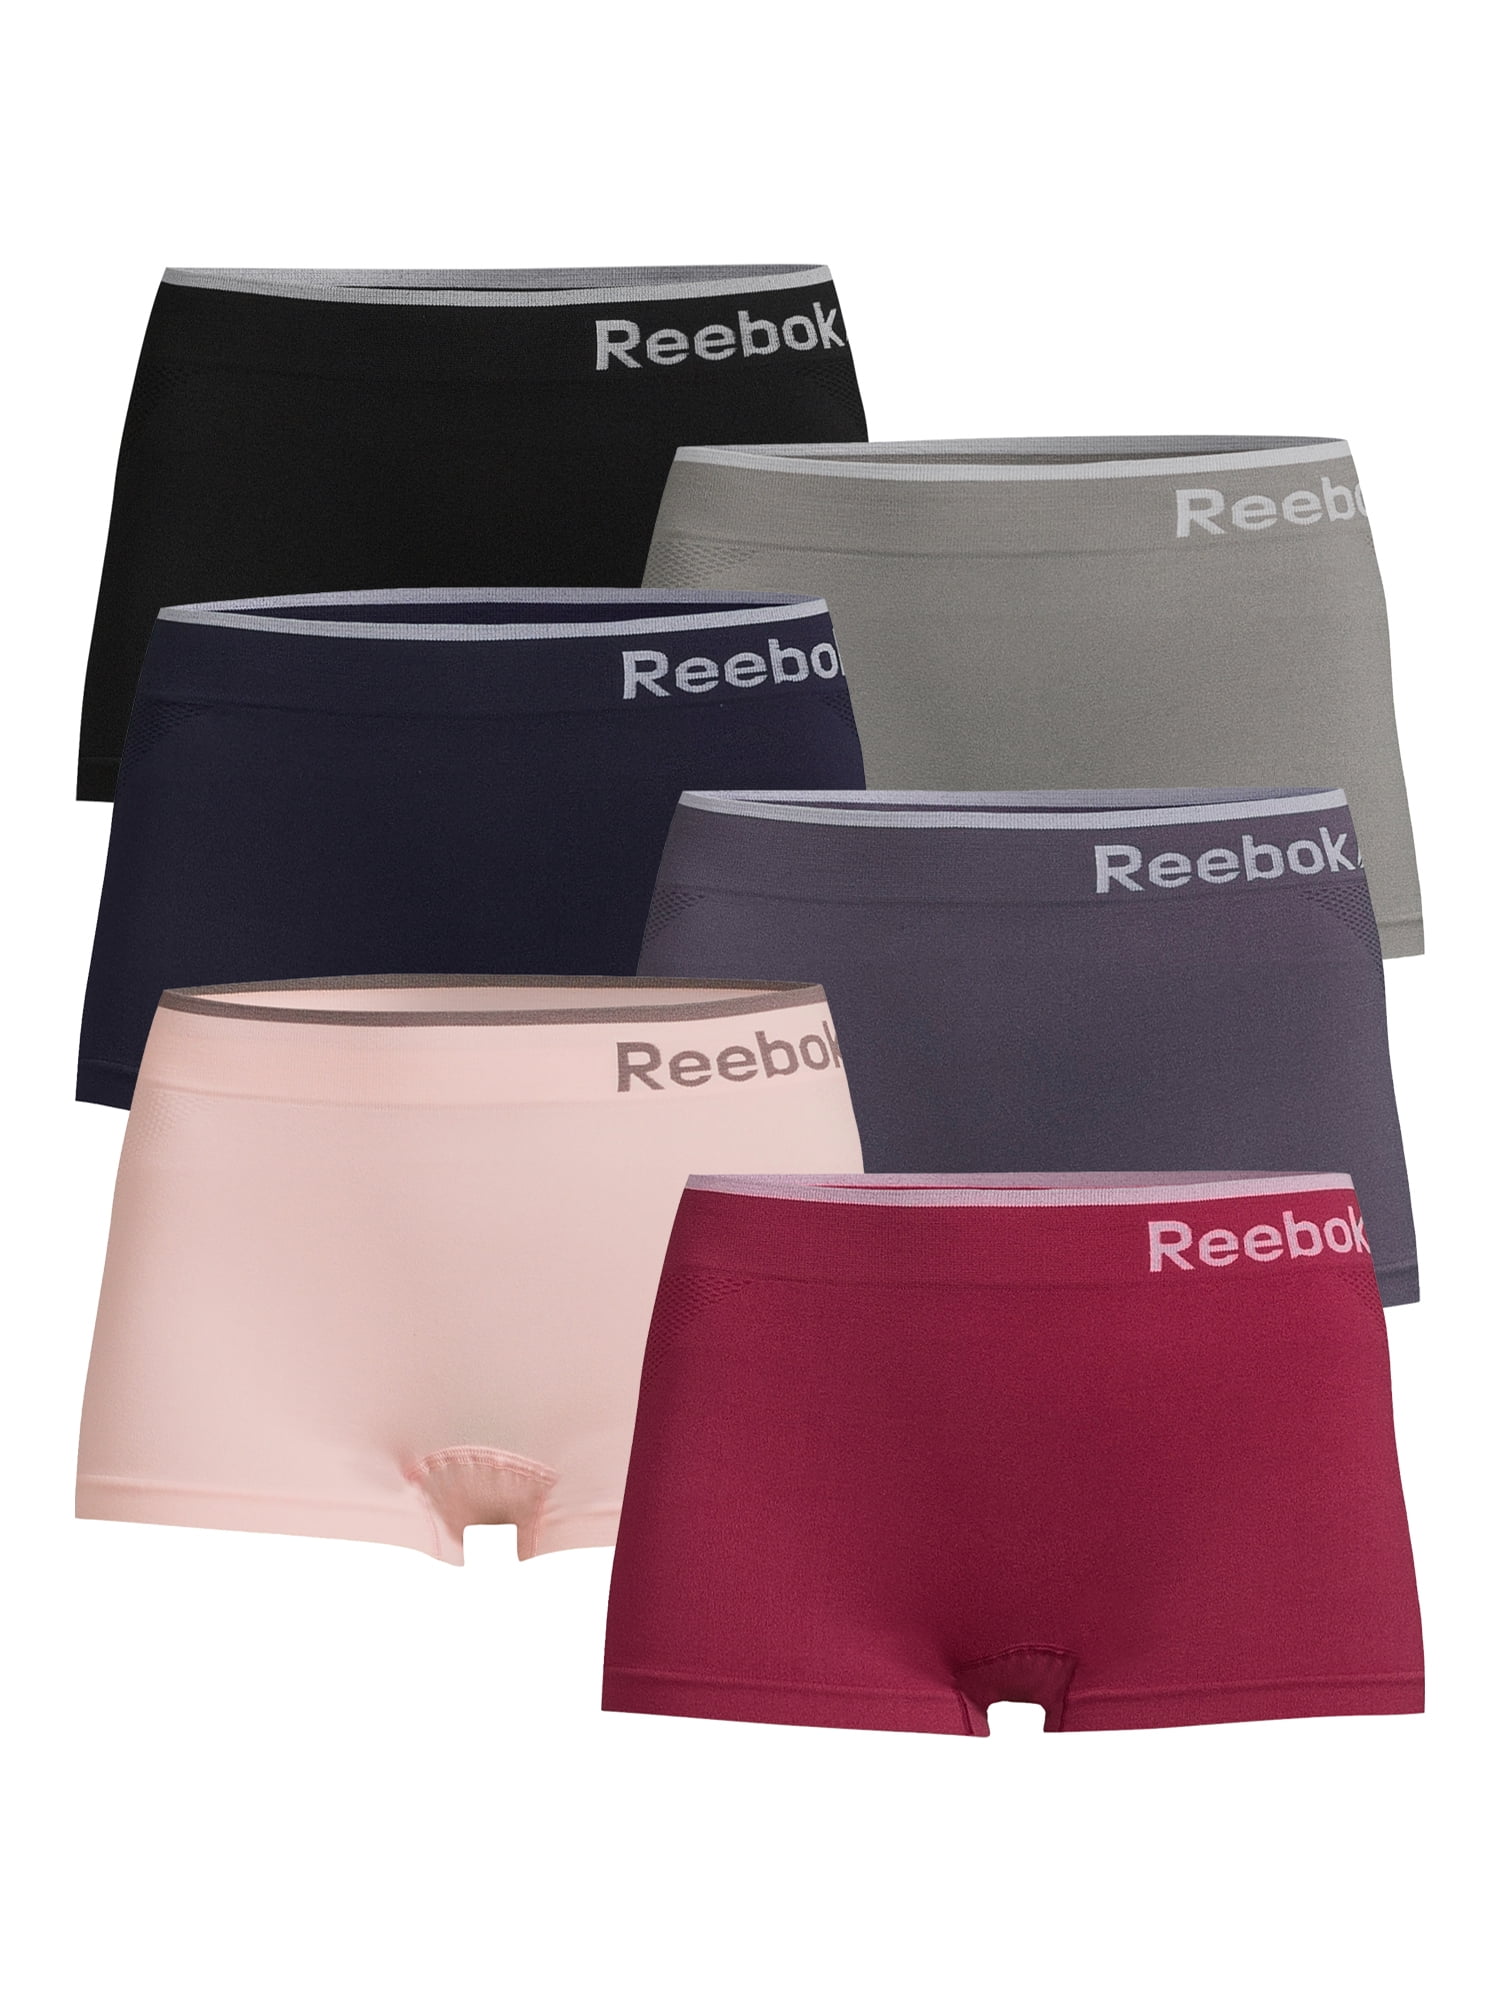 Reebok Women's Seamless Stretch Performance Boyshort Panties (6